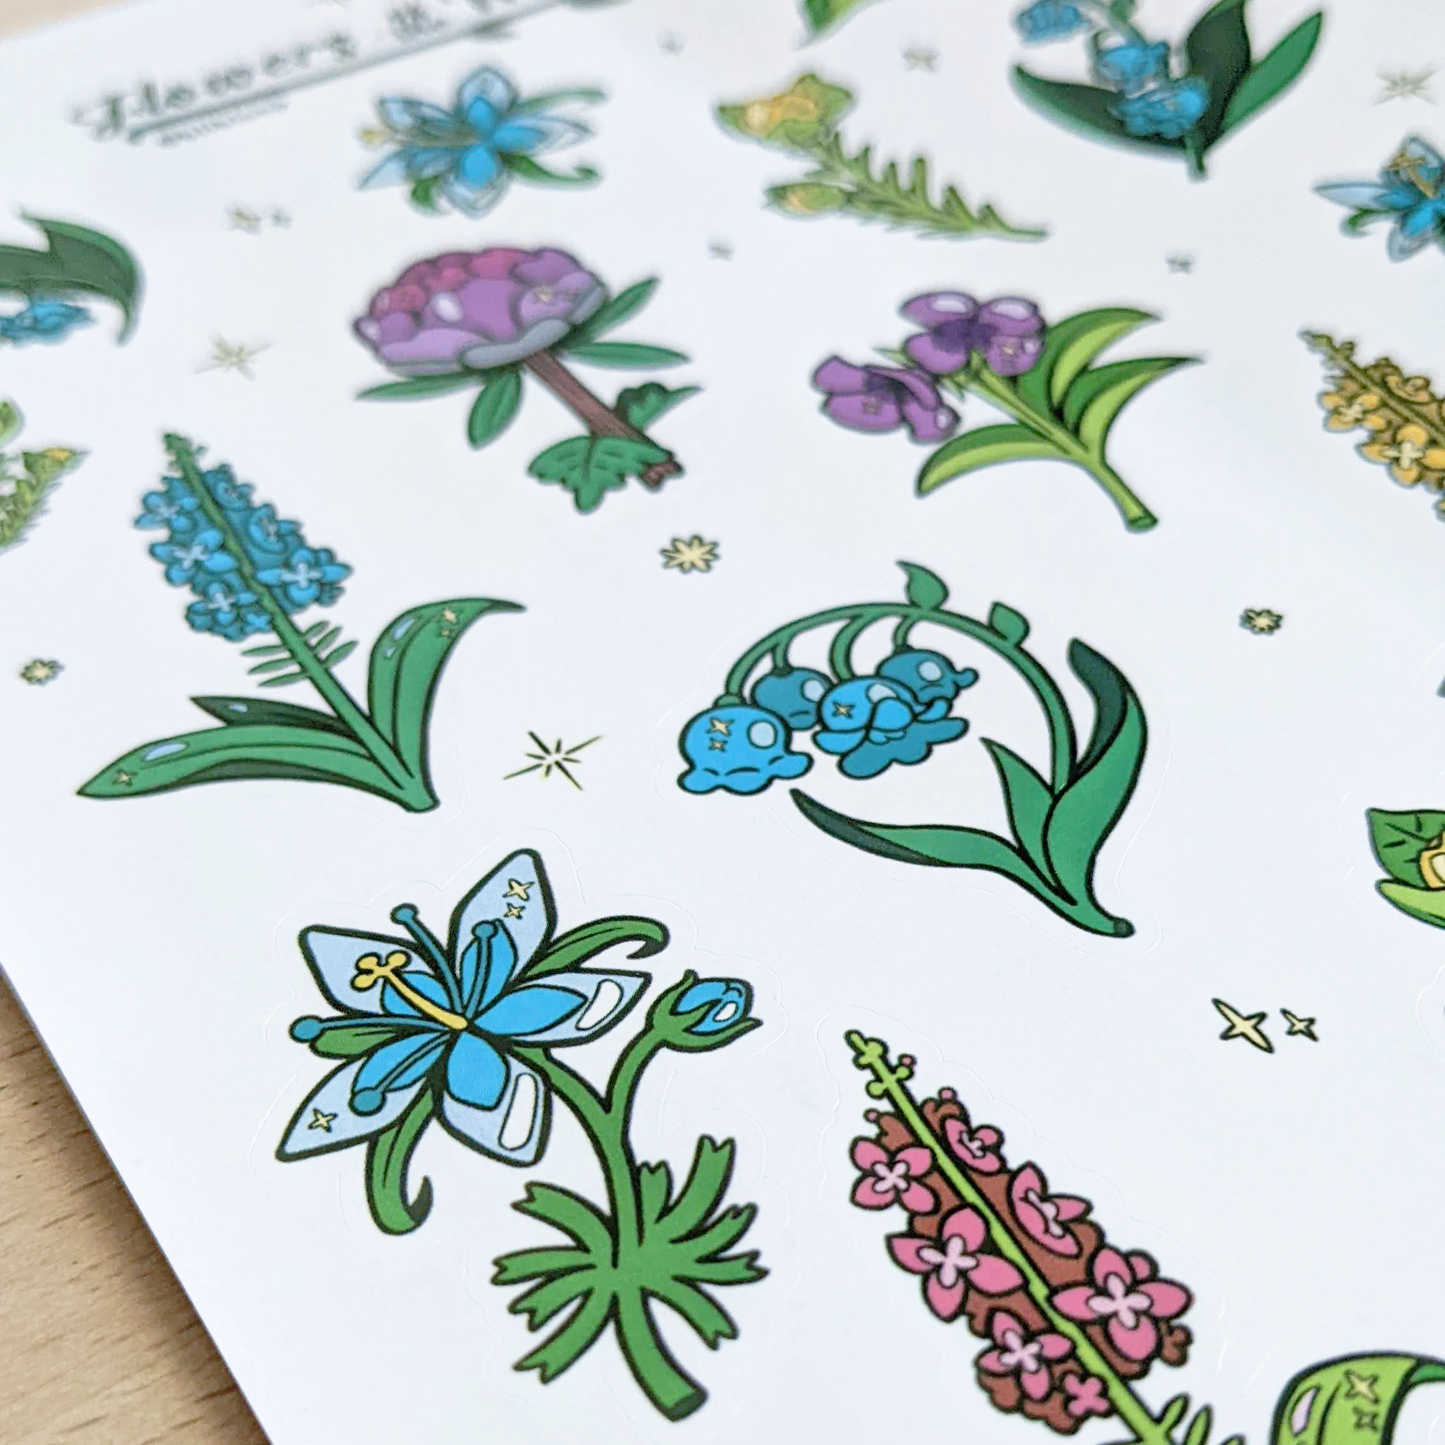 Sticker Sheet - Flowers of the Wild - 16 Stickers